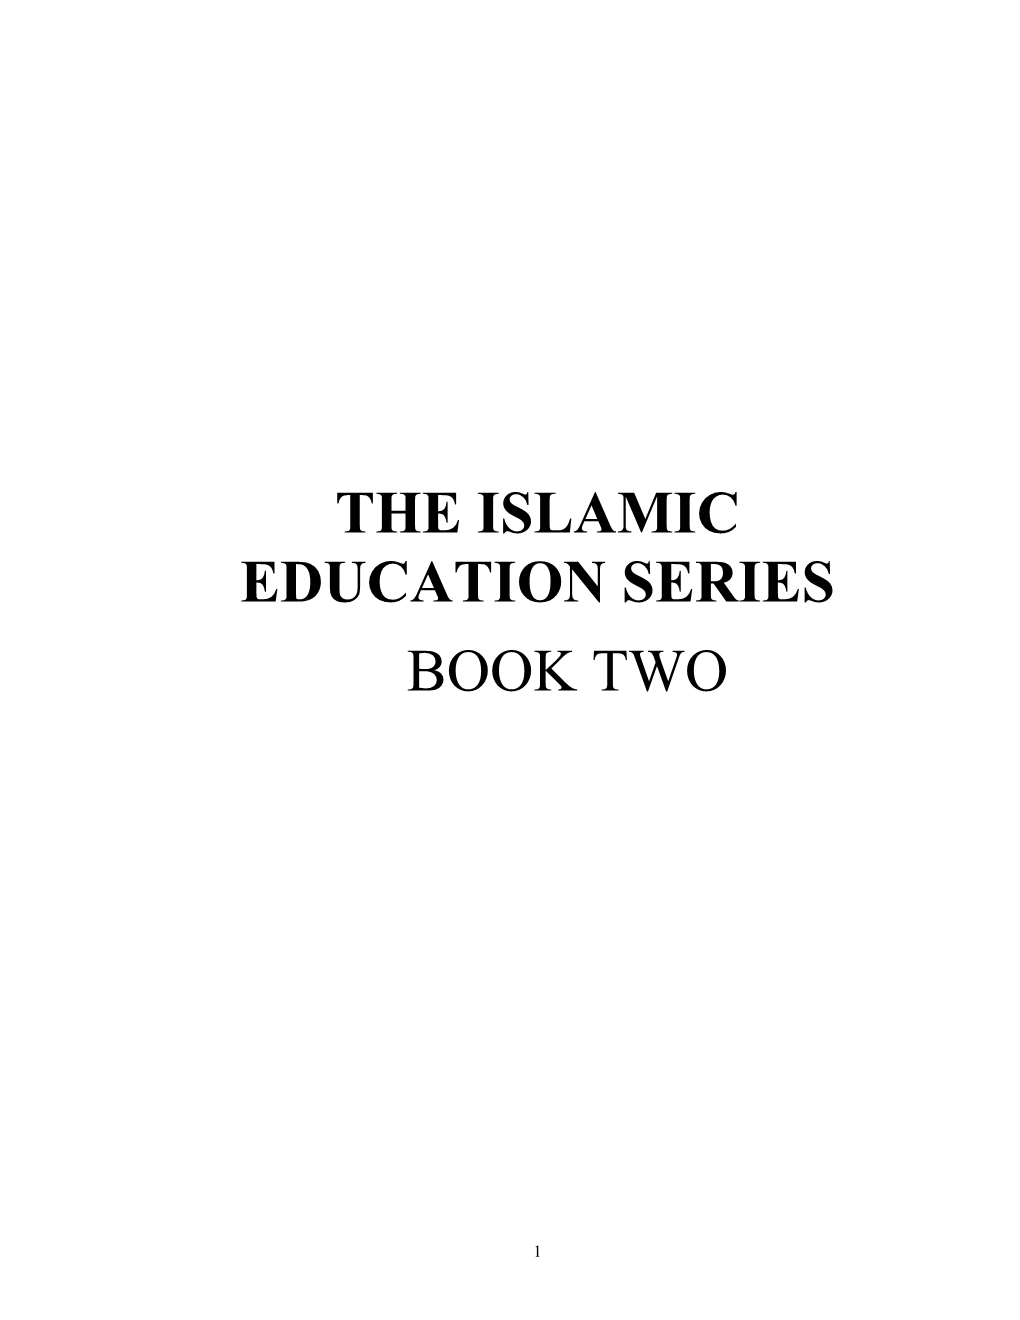 The Islamic Education Series Book